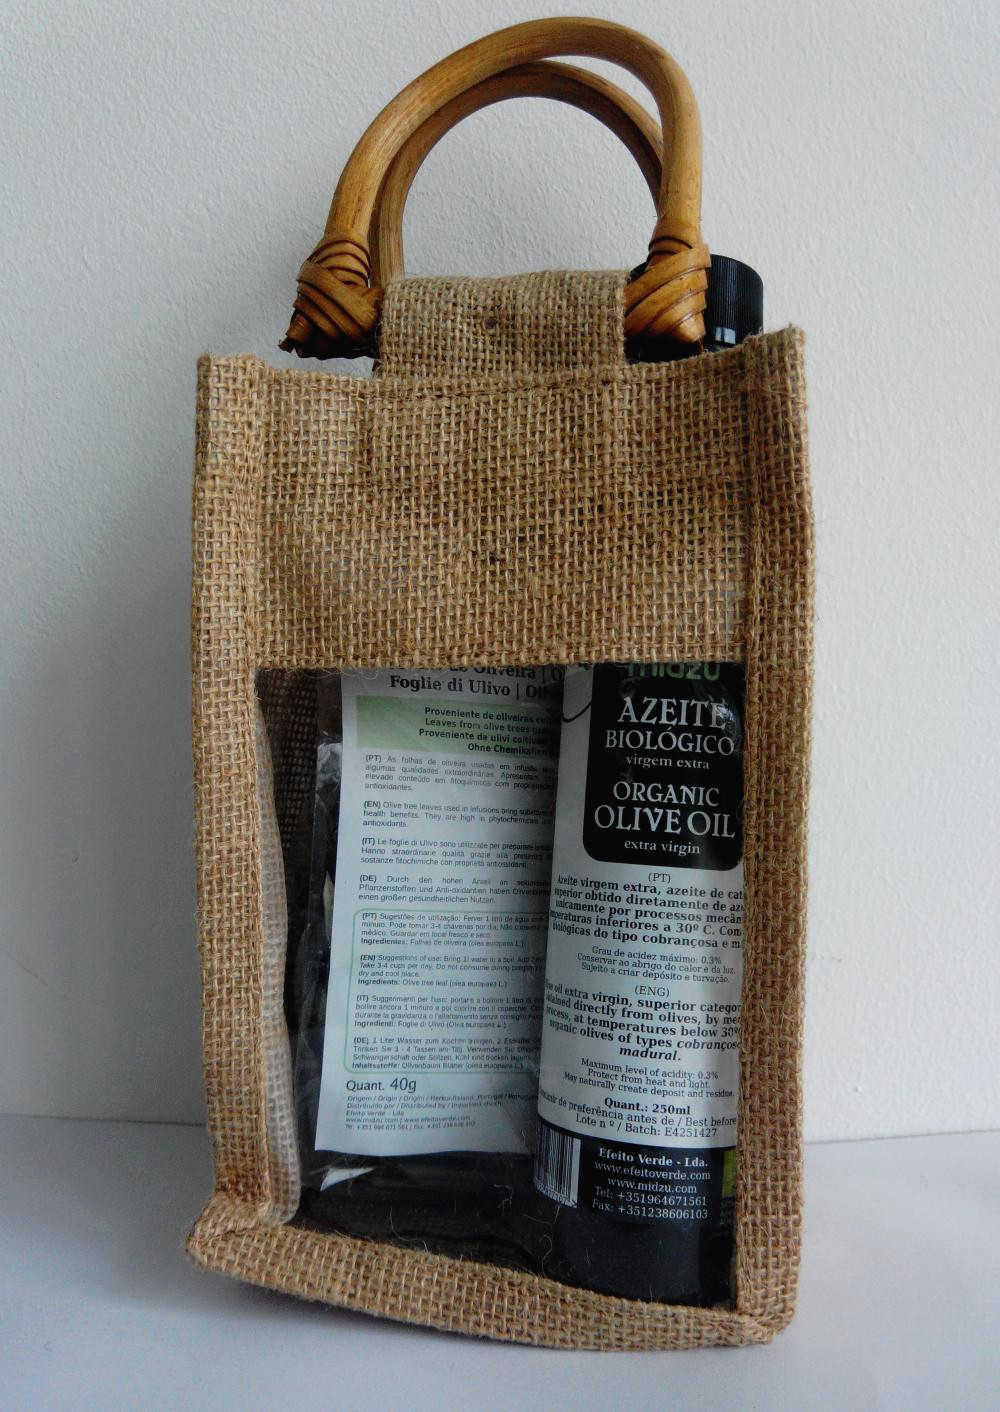 Midzu olive oil and olive leaf tea in juta bag